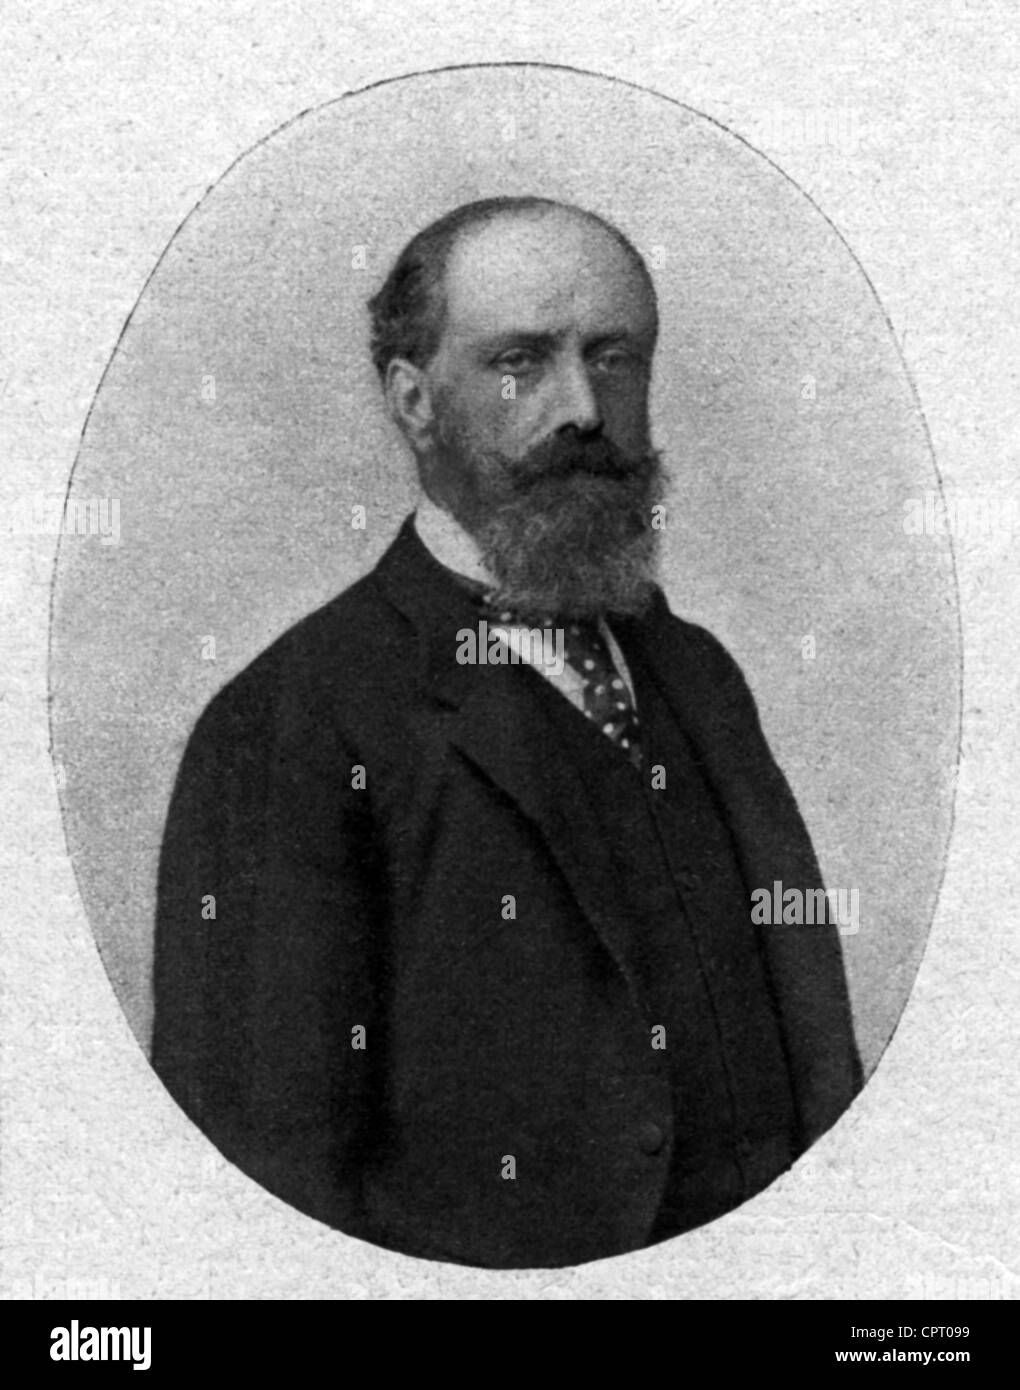 Radolin, Hugo Prince von, 1.4.1841 - 10.7.1917, German diplomat, portrait, in the oval, 1901, Stock Photo